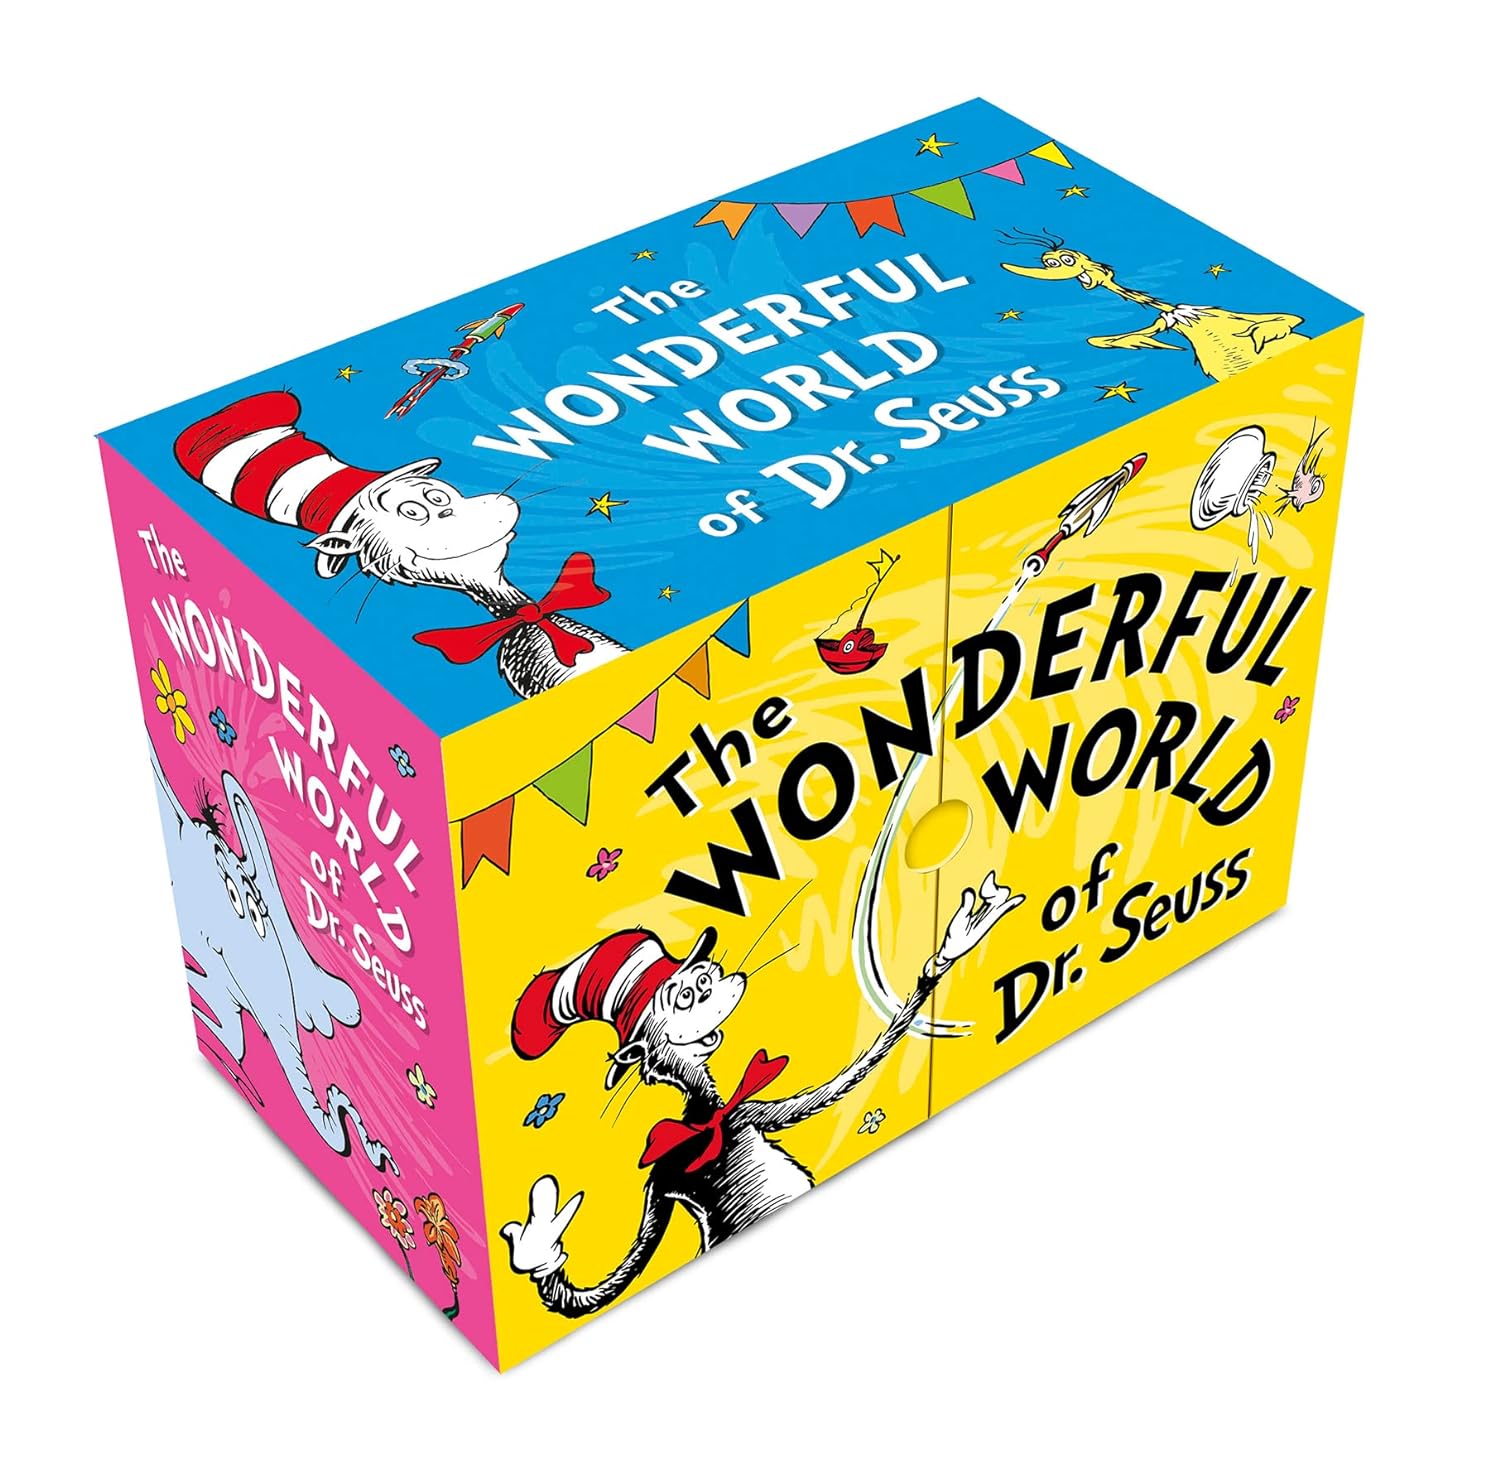 The Wonderful World of Dr. Seuss 20books of Box set (Hard Cover)